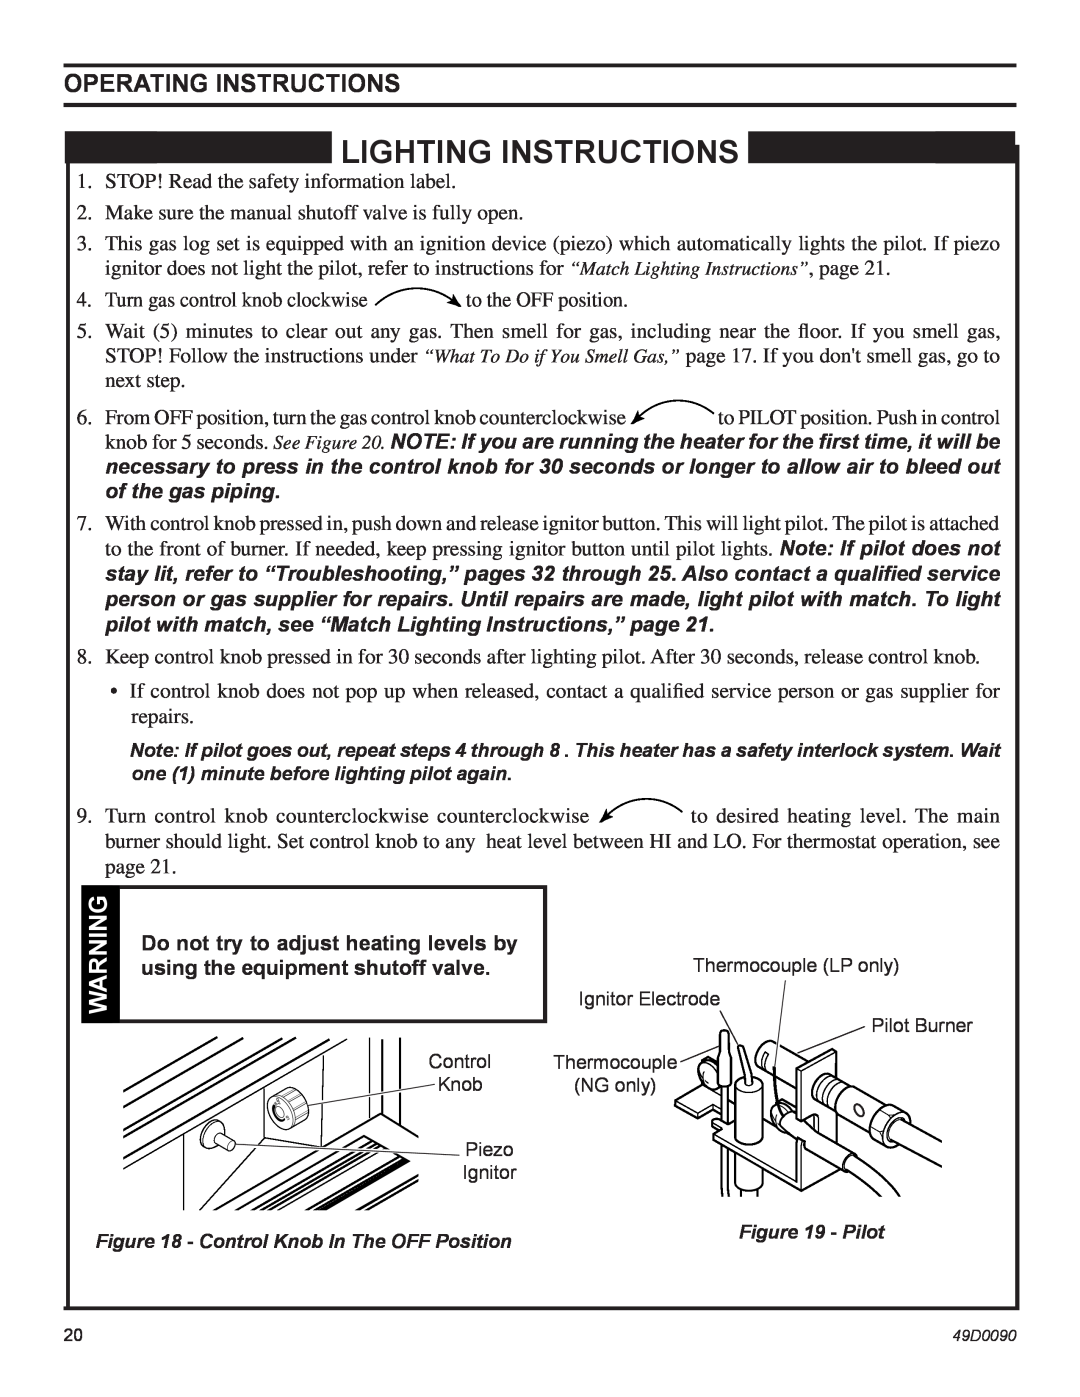 Monessen Hearth BTU/Hr Lighting Instructions, Do not try to adjust heating levels by, using the equipment shutoff valve 